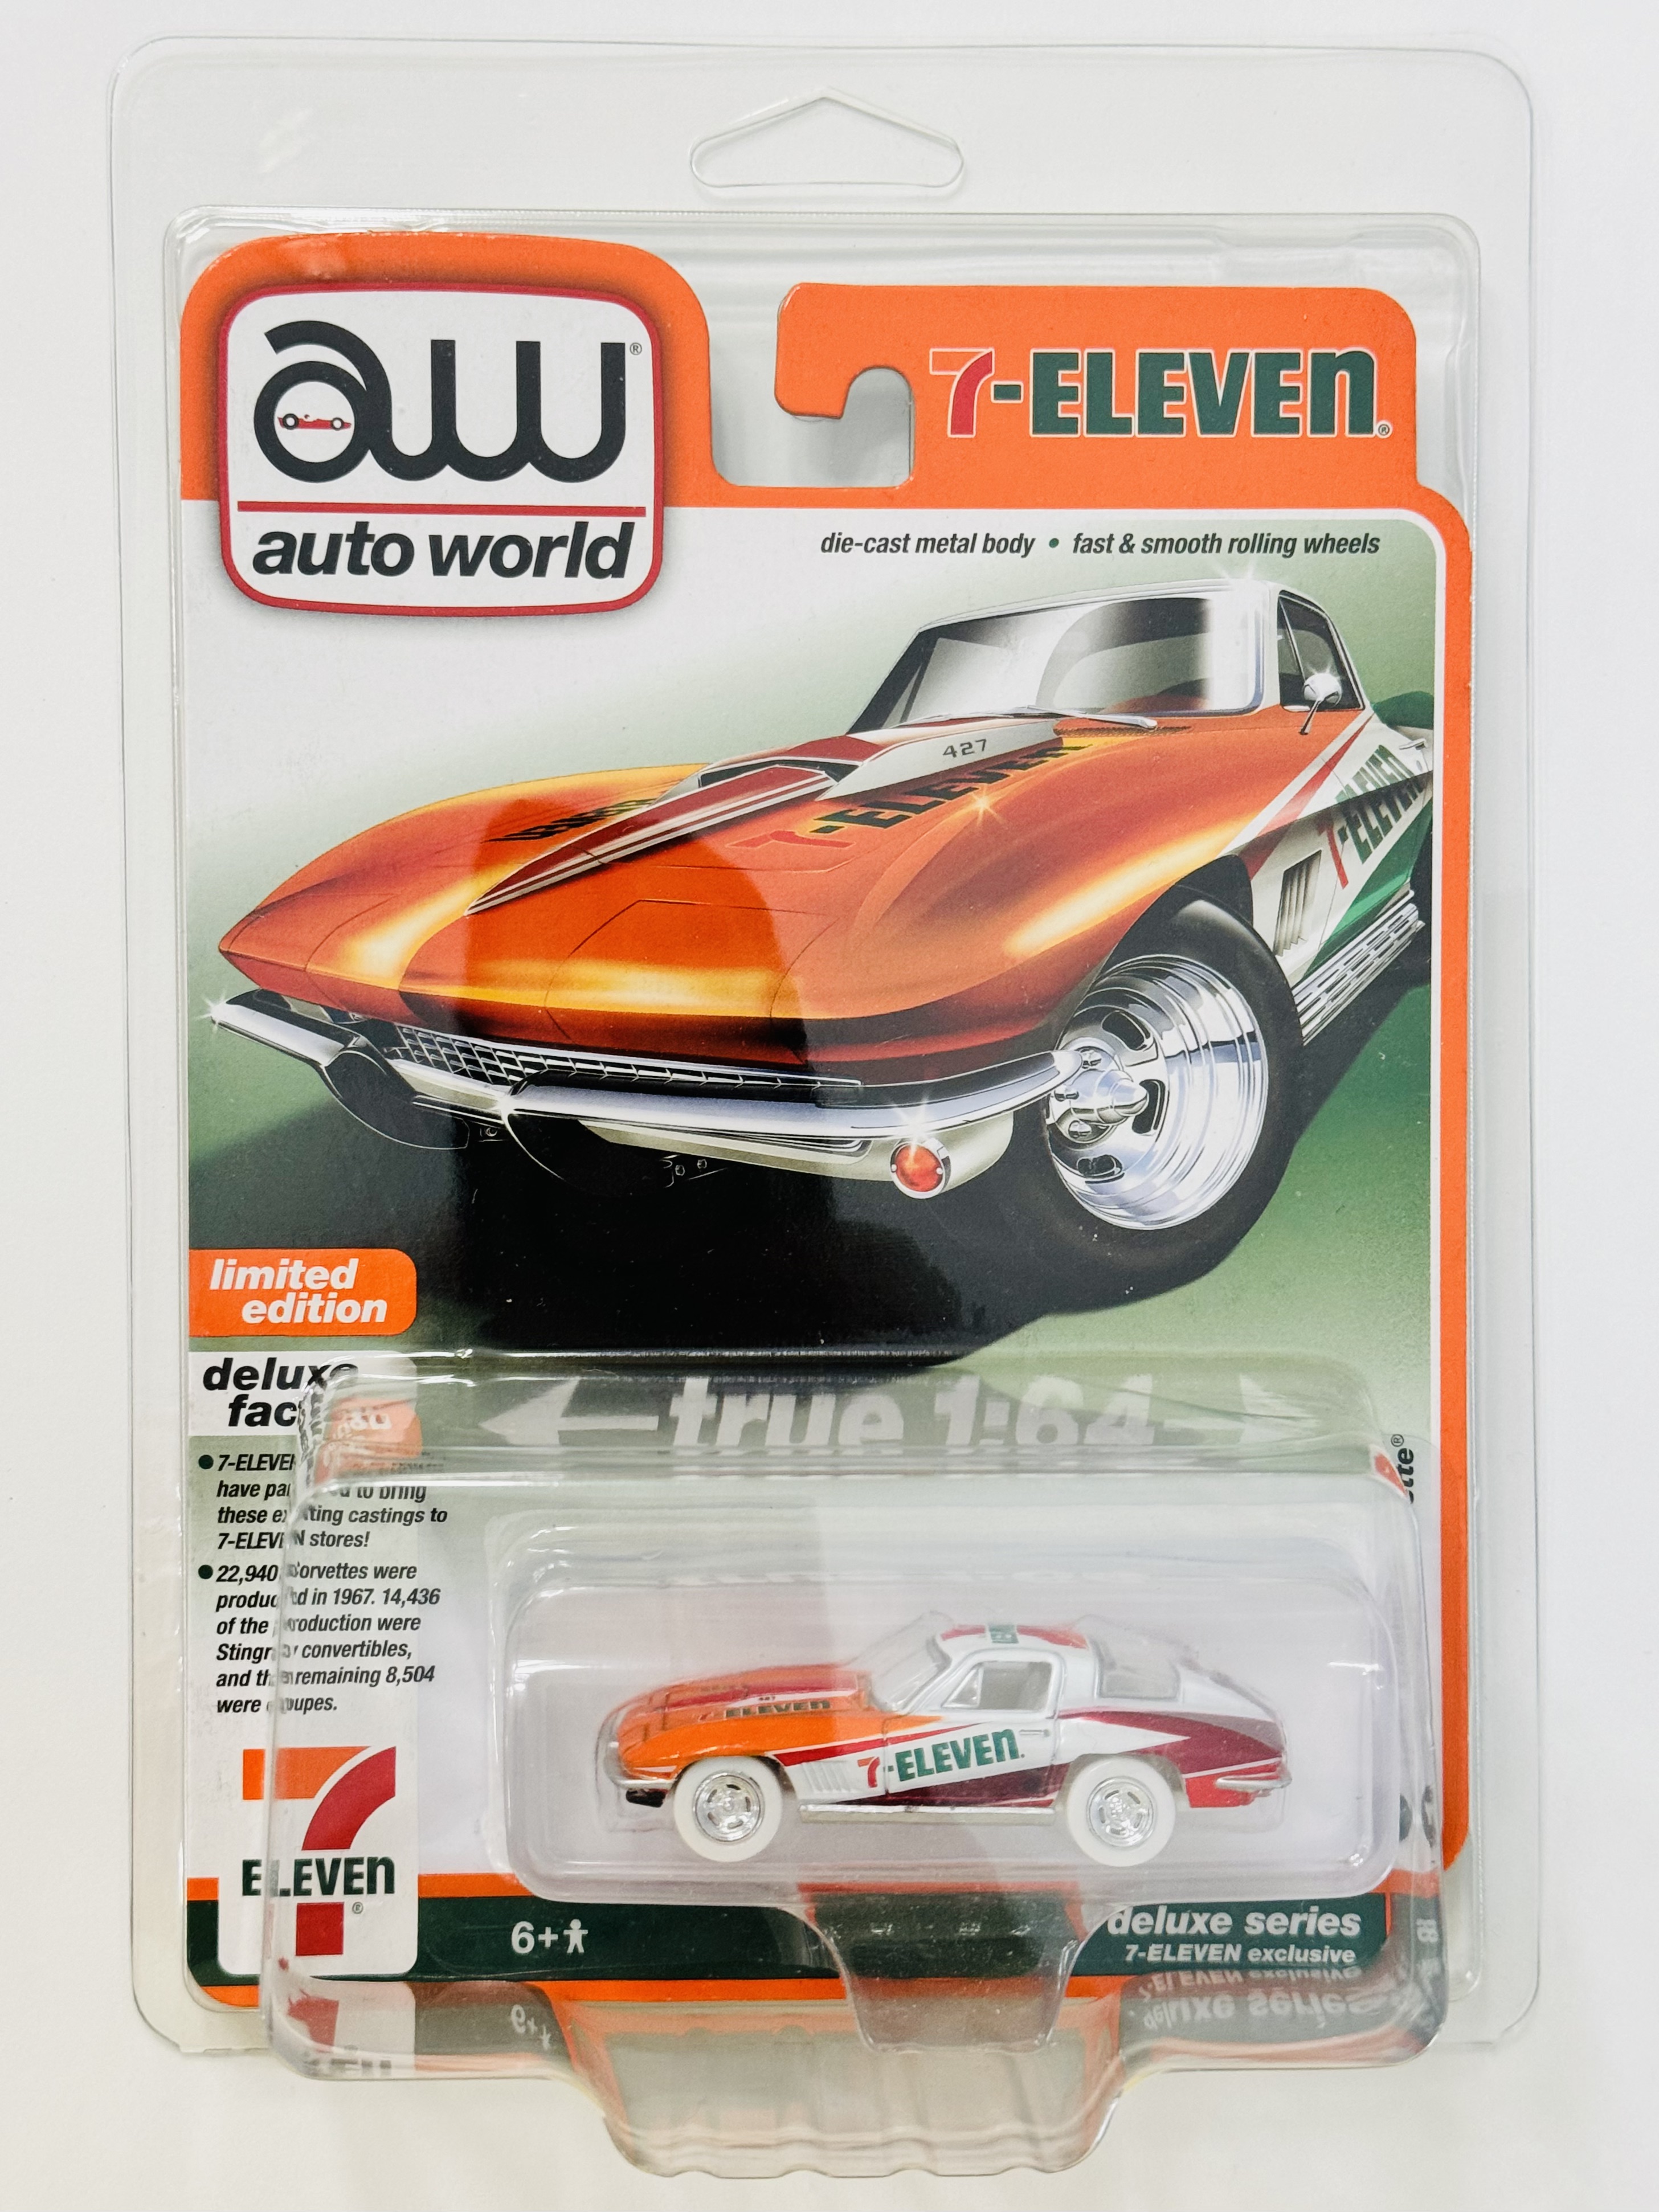 Auto World 7-Eleven 1967 Chevy Corvette Chase